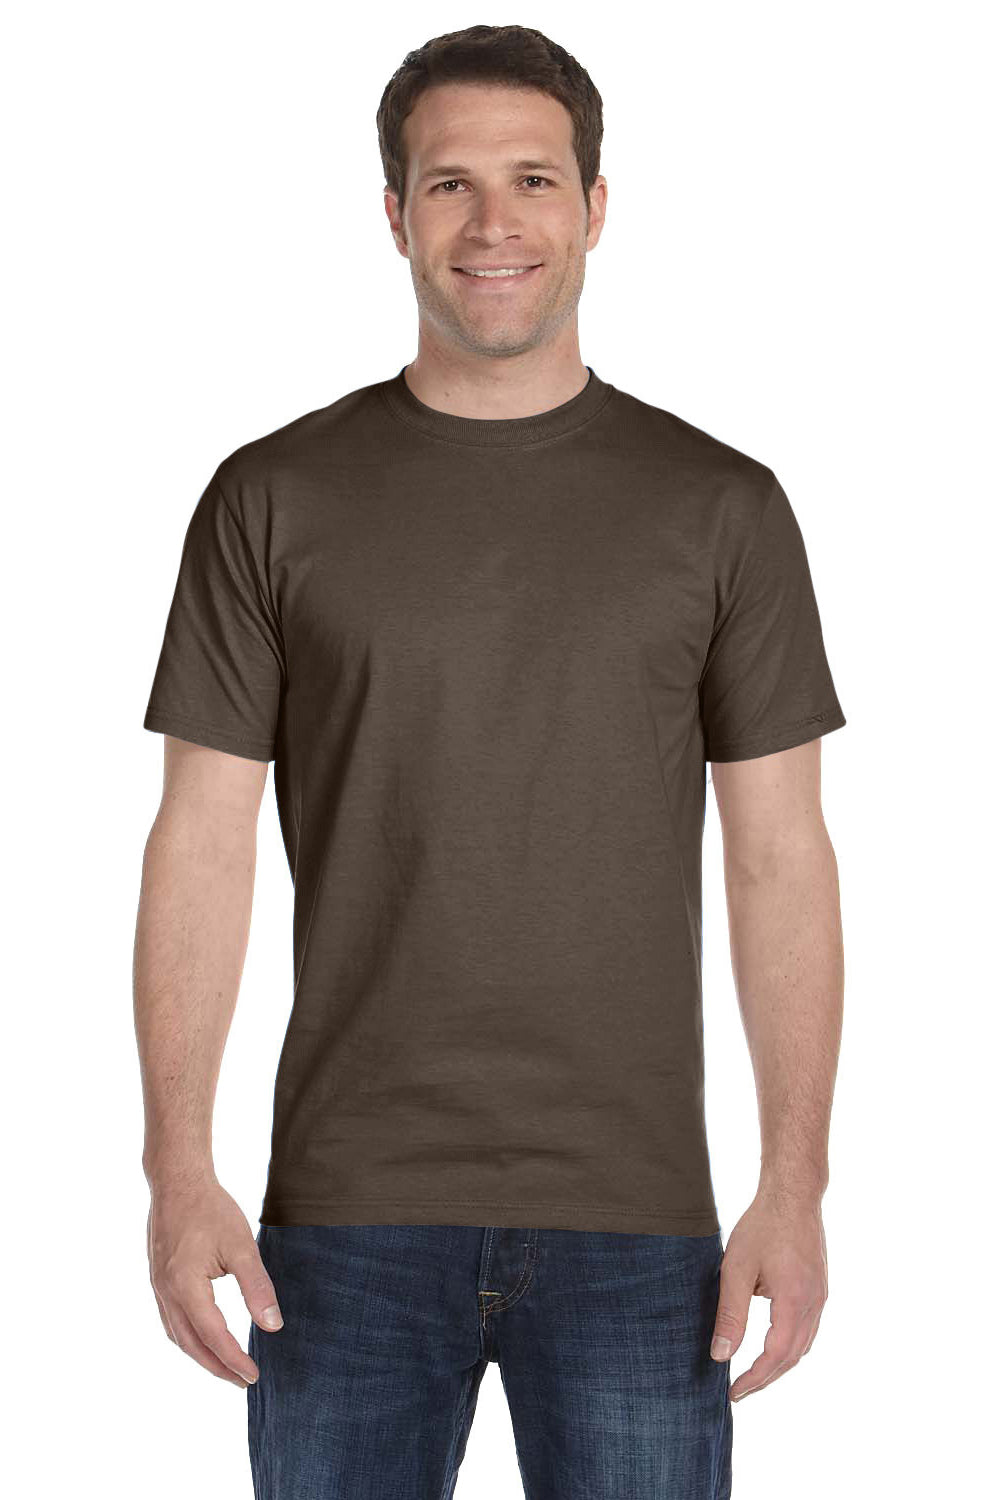 Hanes 5280 Mens ComfortSoft Short Sleeve Crewneck T-Shirt Dark Chocolate Brown Front